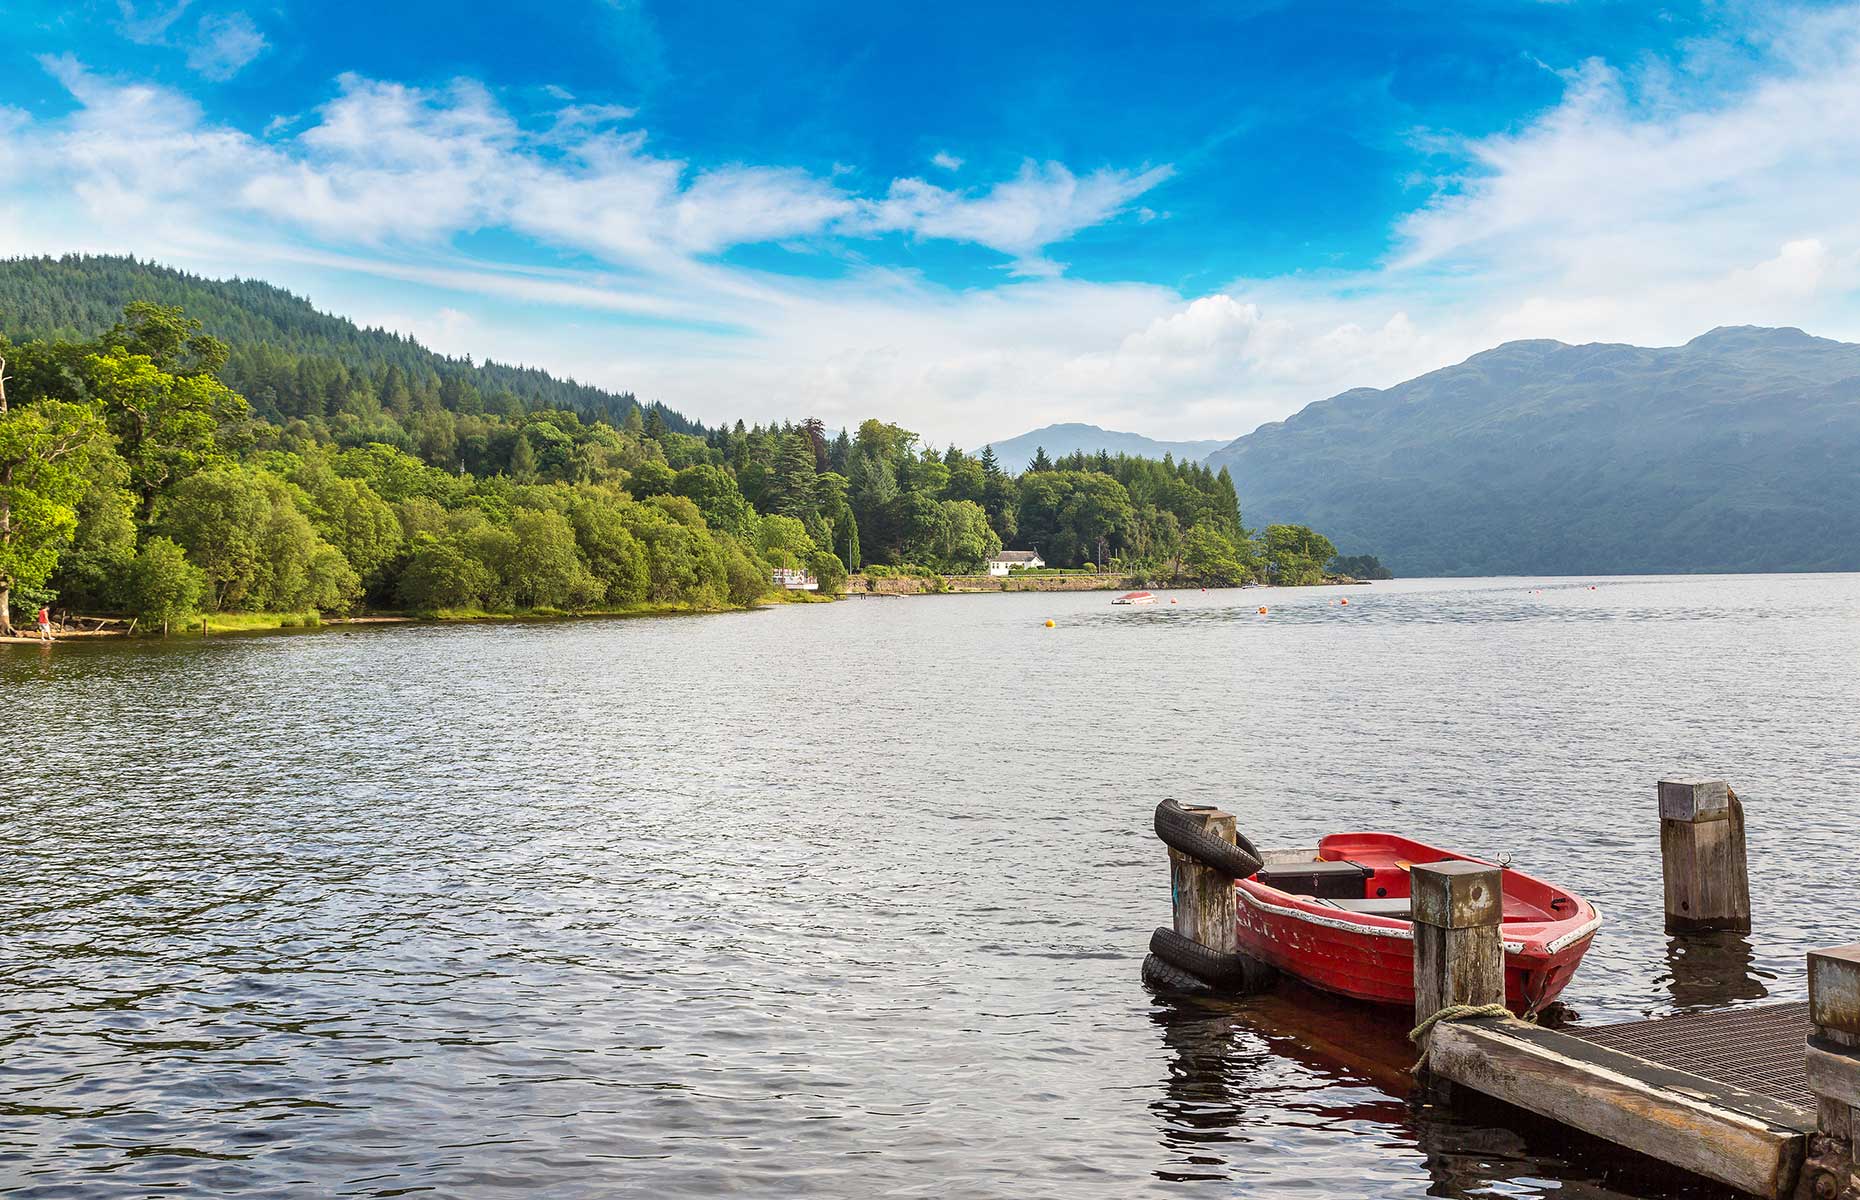 Loch Lomond, Scotland (Image: S-F/Shutterstock)